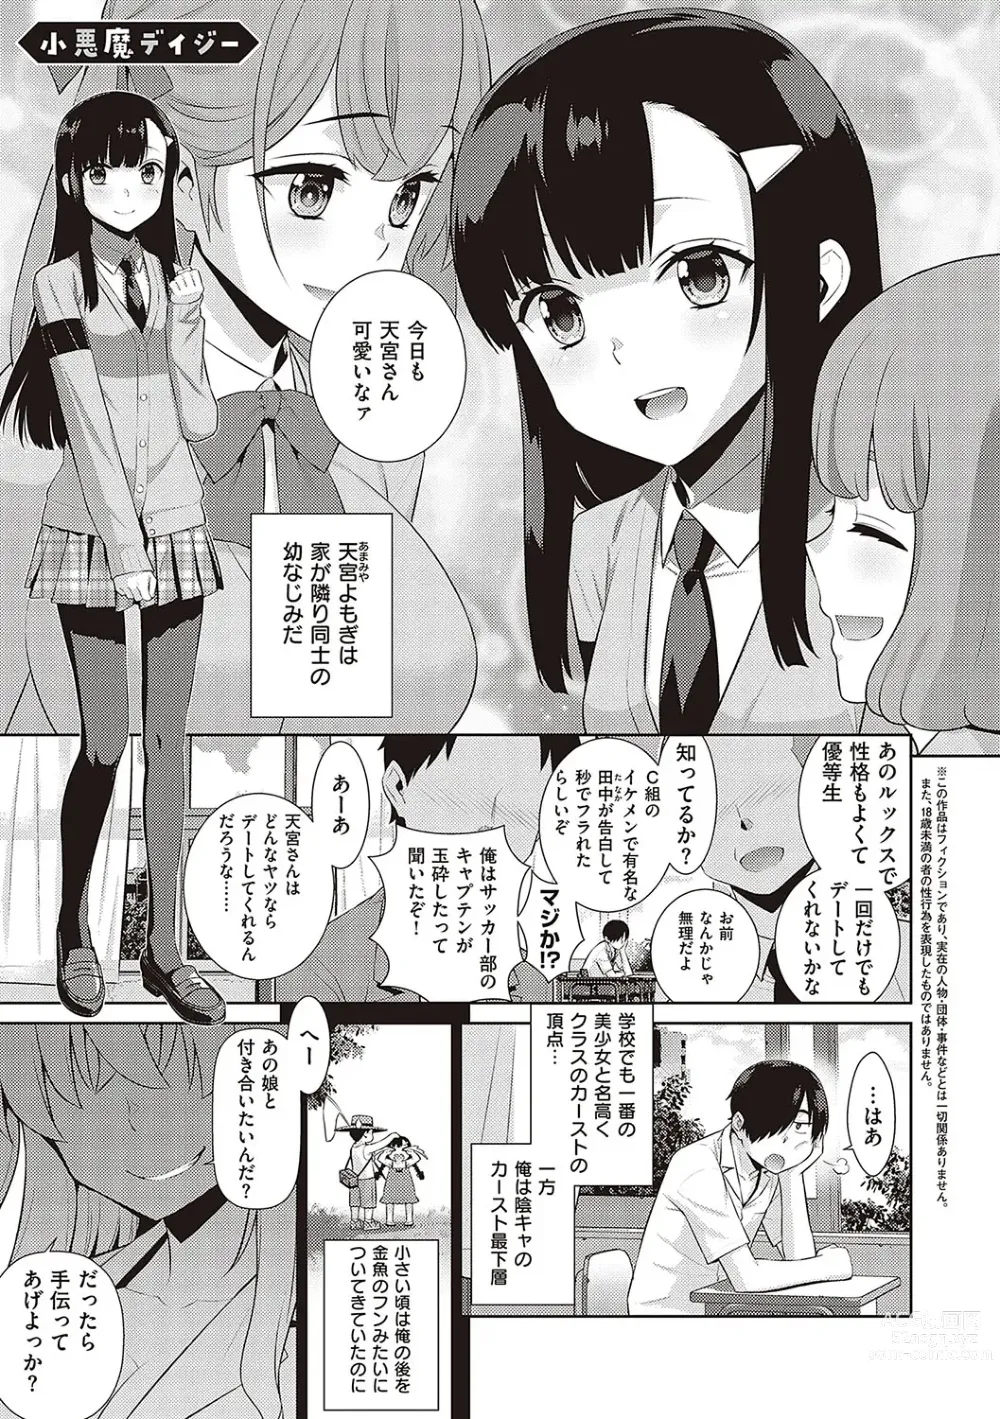 Page 4 of manga KOAKUMA DAISY